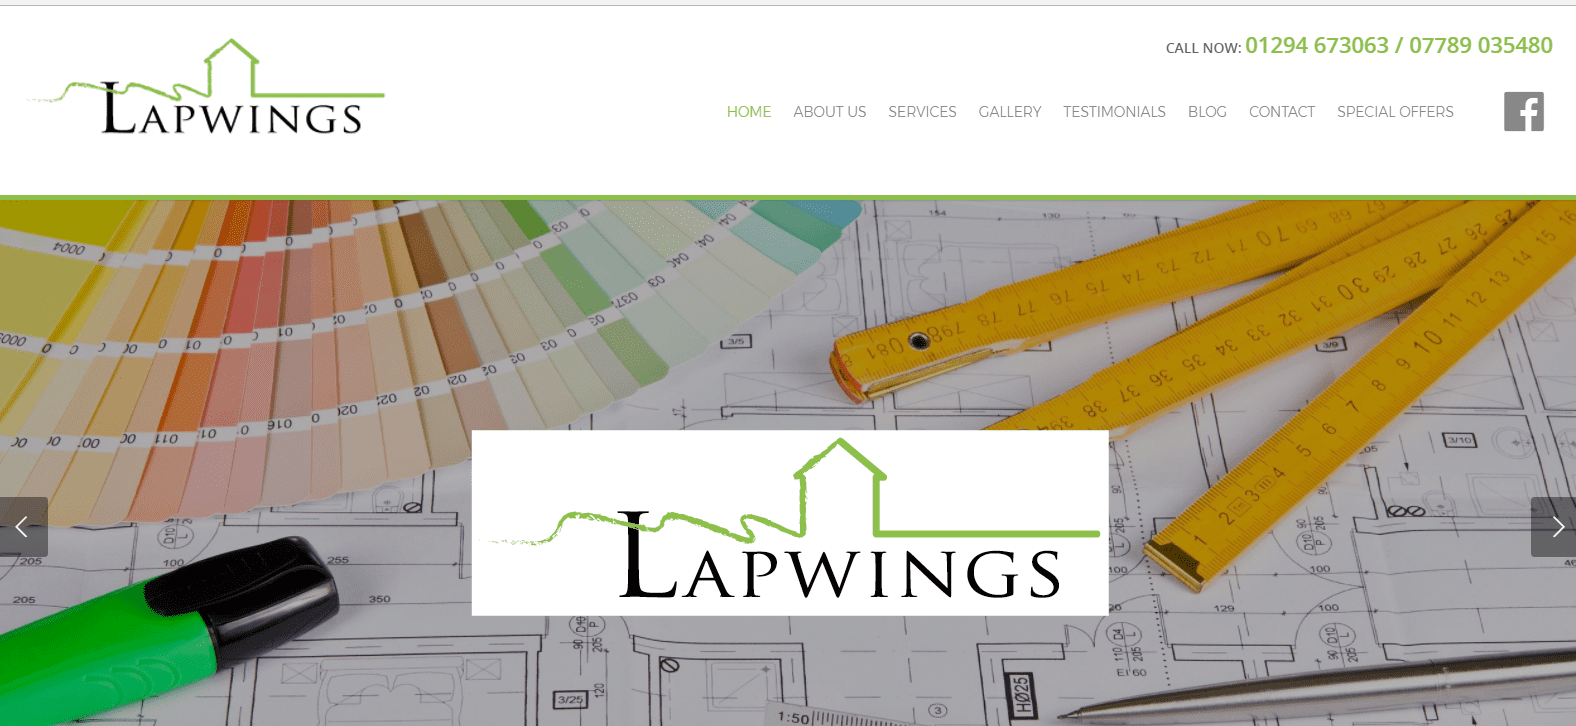 WordPress CMS Website By Corrie D Marketing for Lapwings Ltd